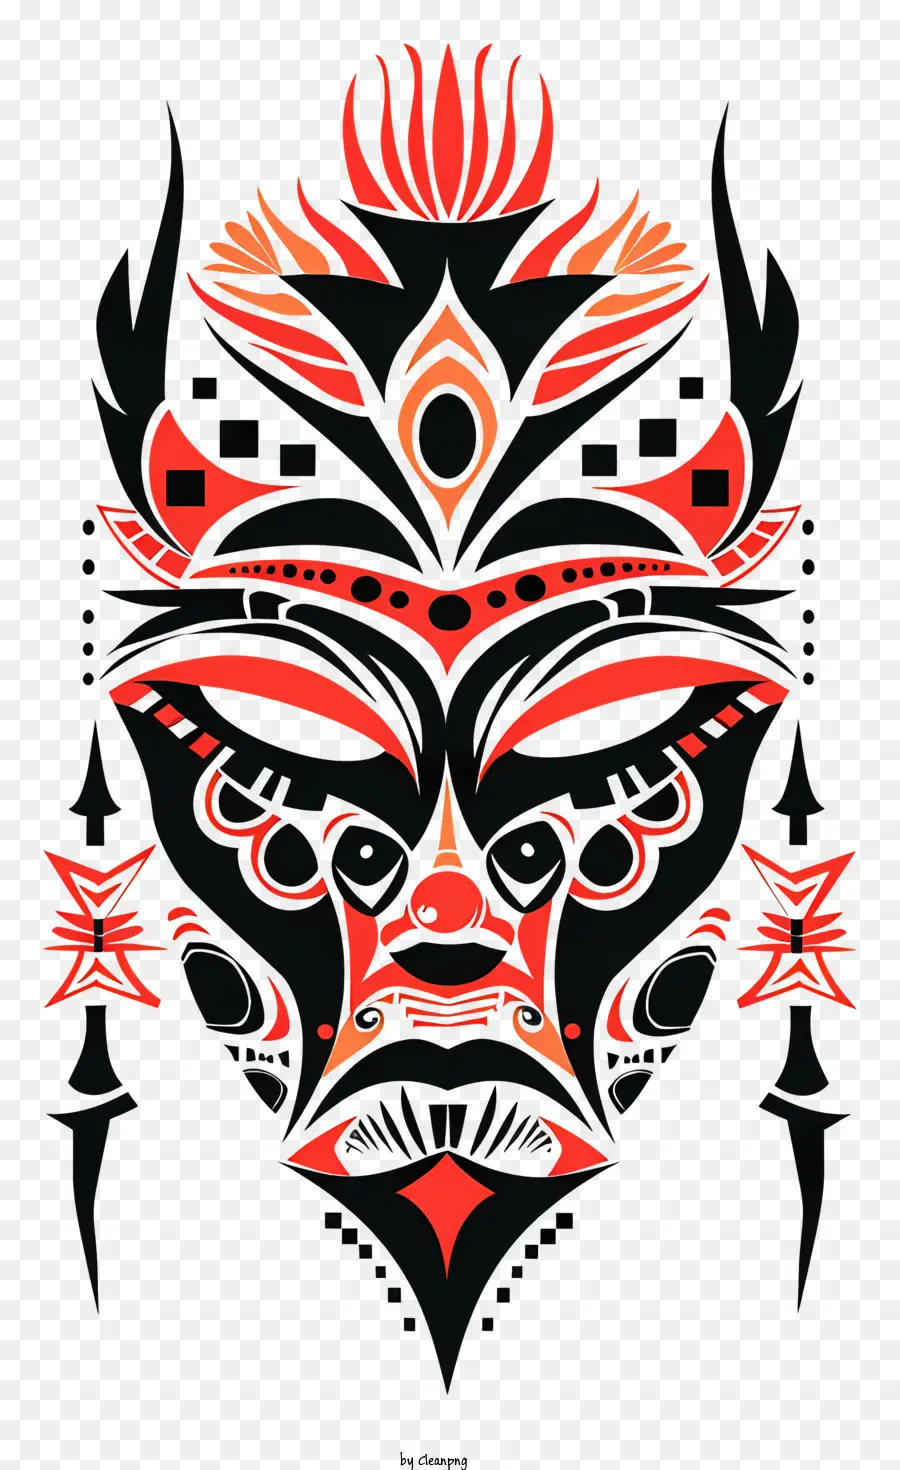 Tattoo tribale Maschera tribale Maschera rossa e nera Design ornato Studi intricati turbini - Design della maschera tribale rossa e nera